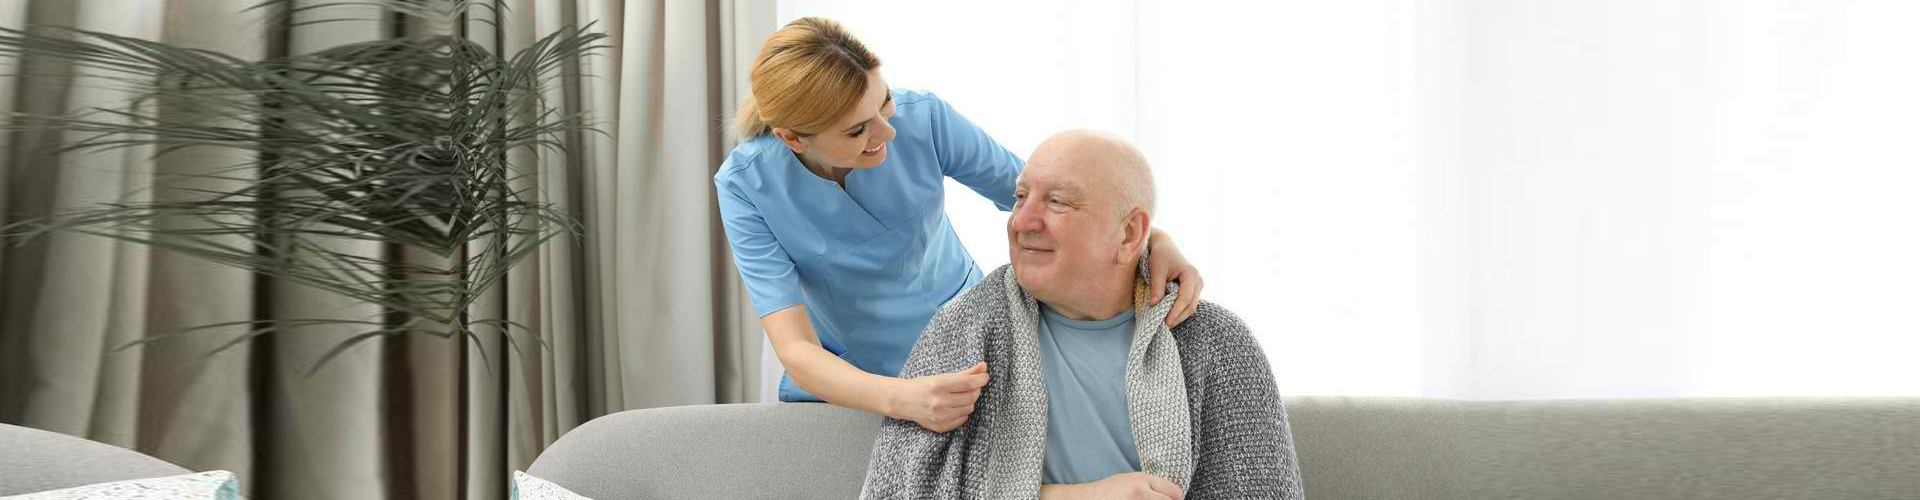 a caregiver woman with an elderly man